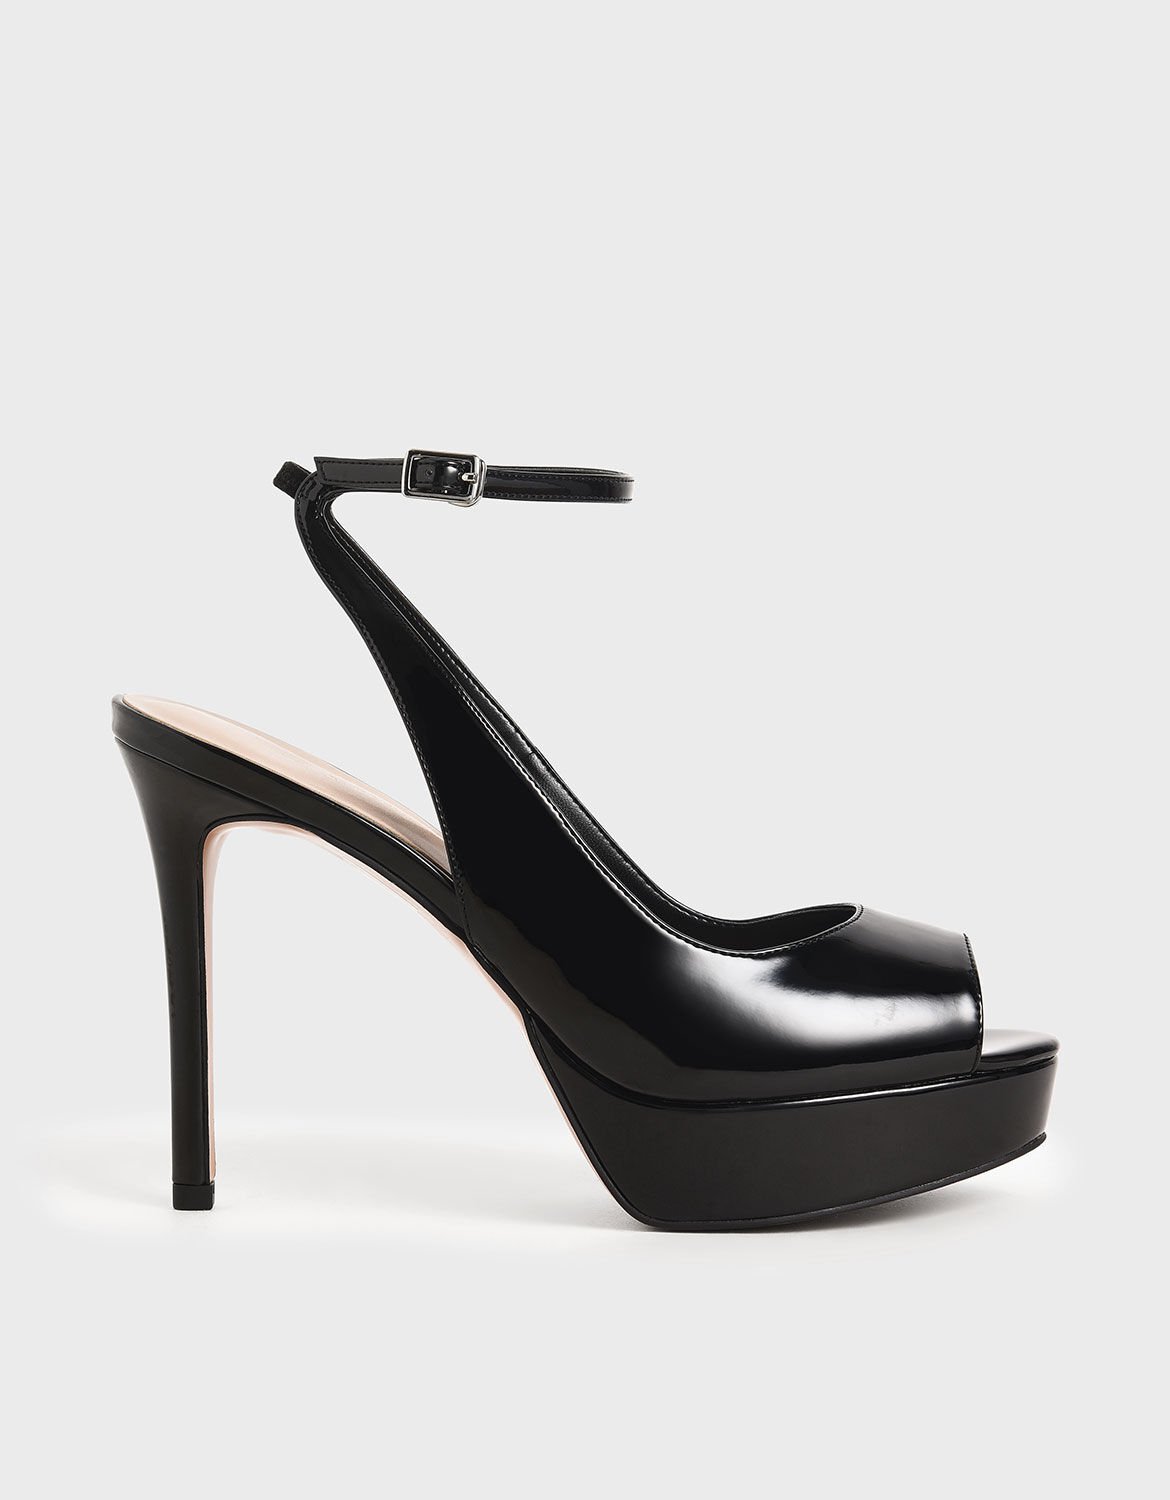 black patent heels australia